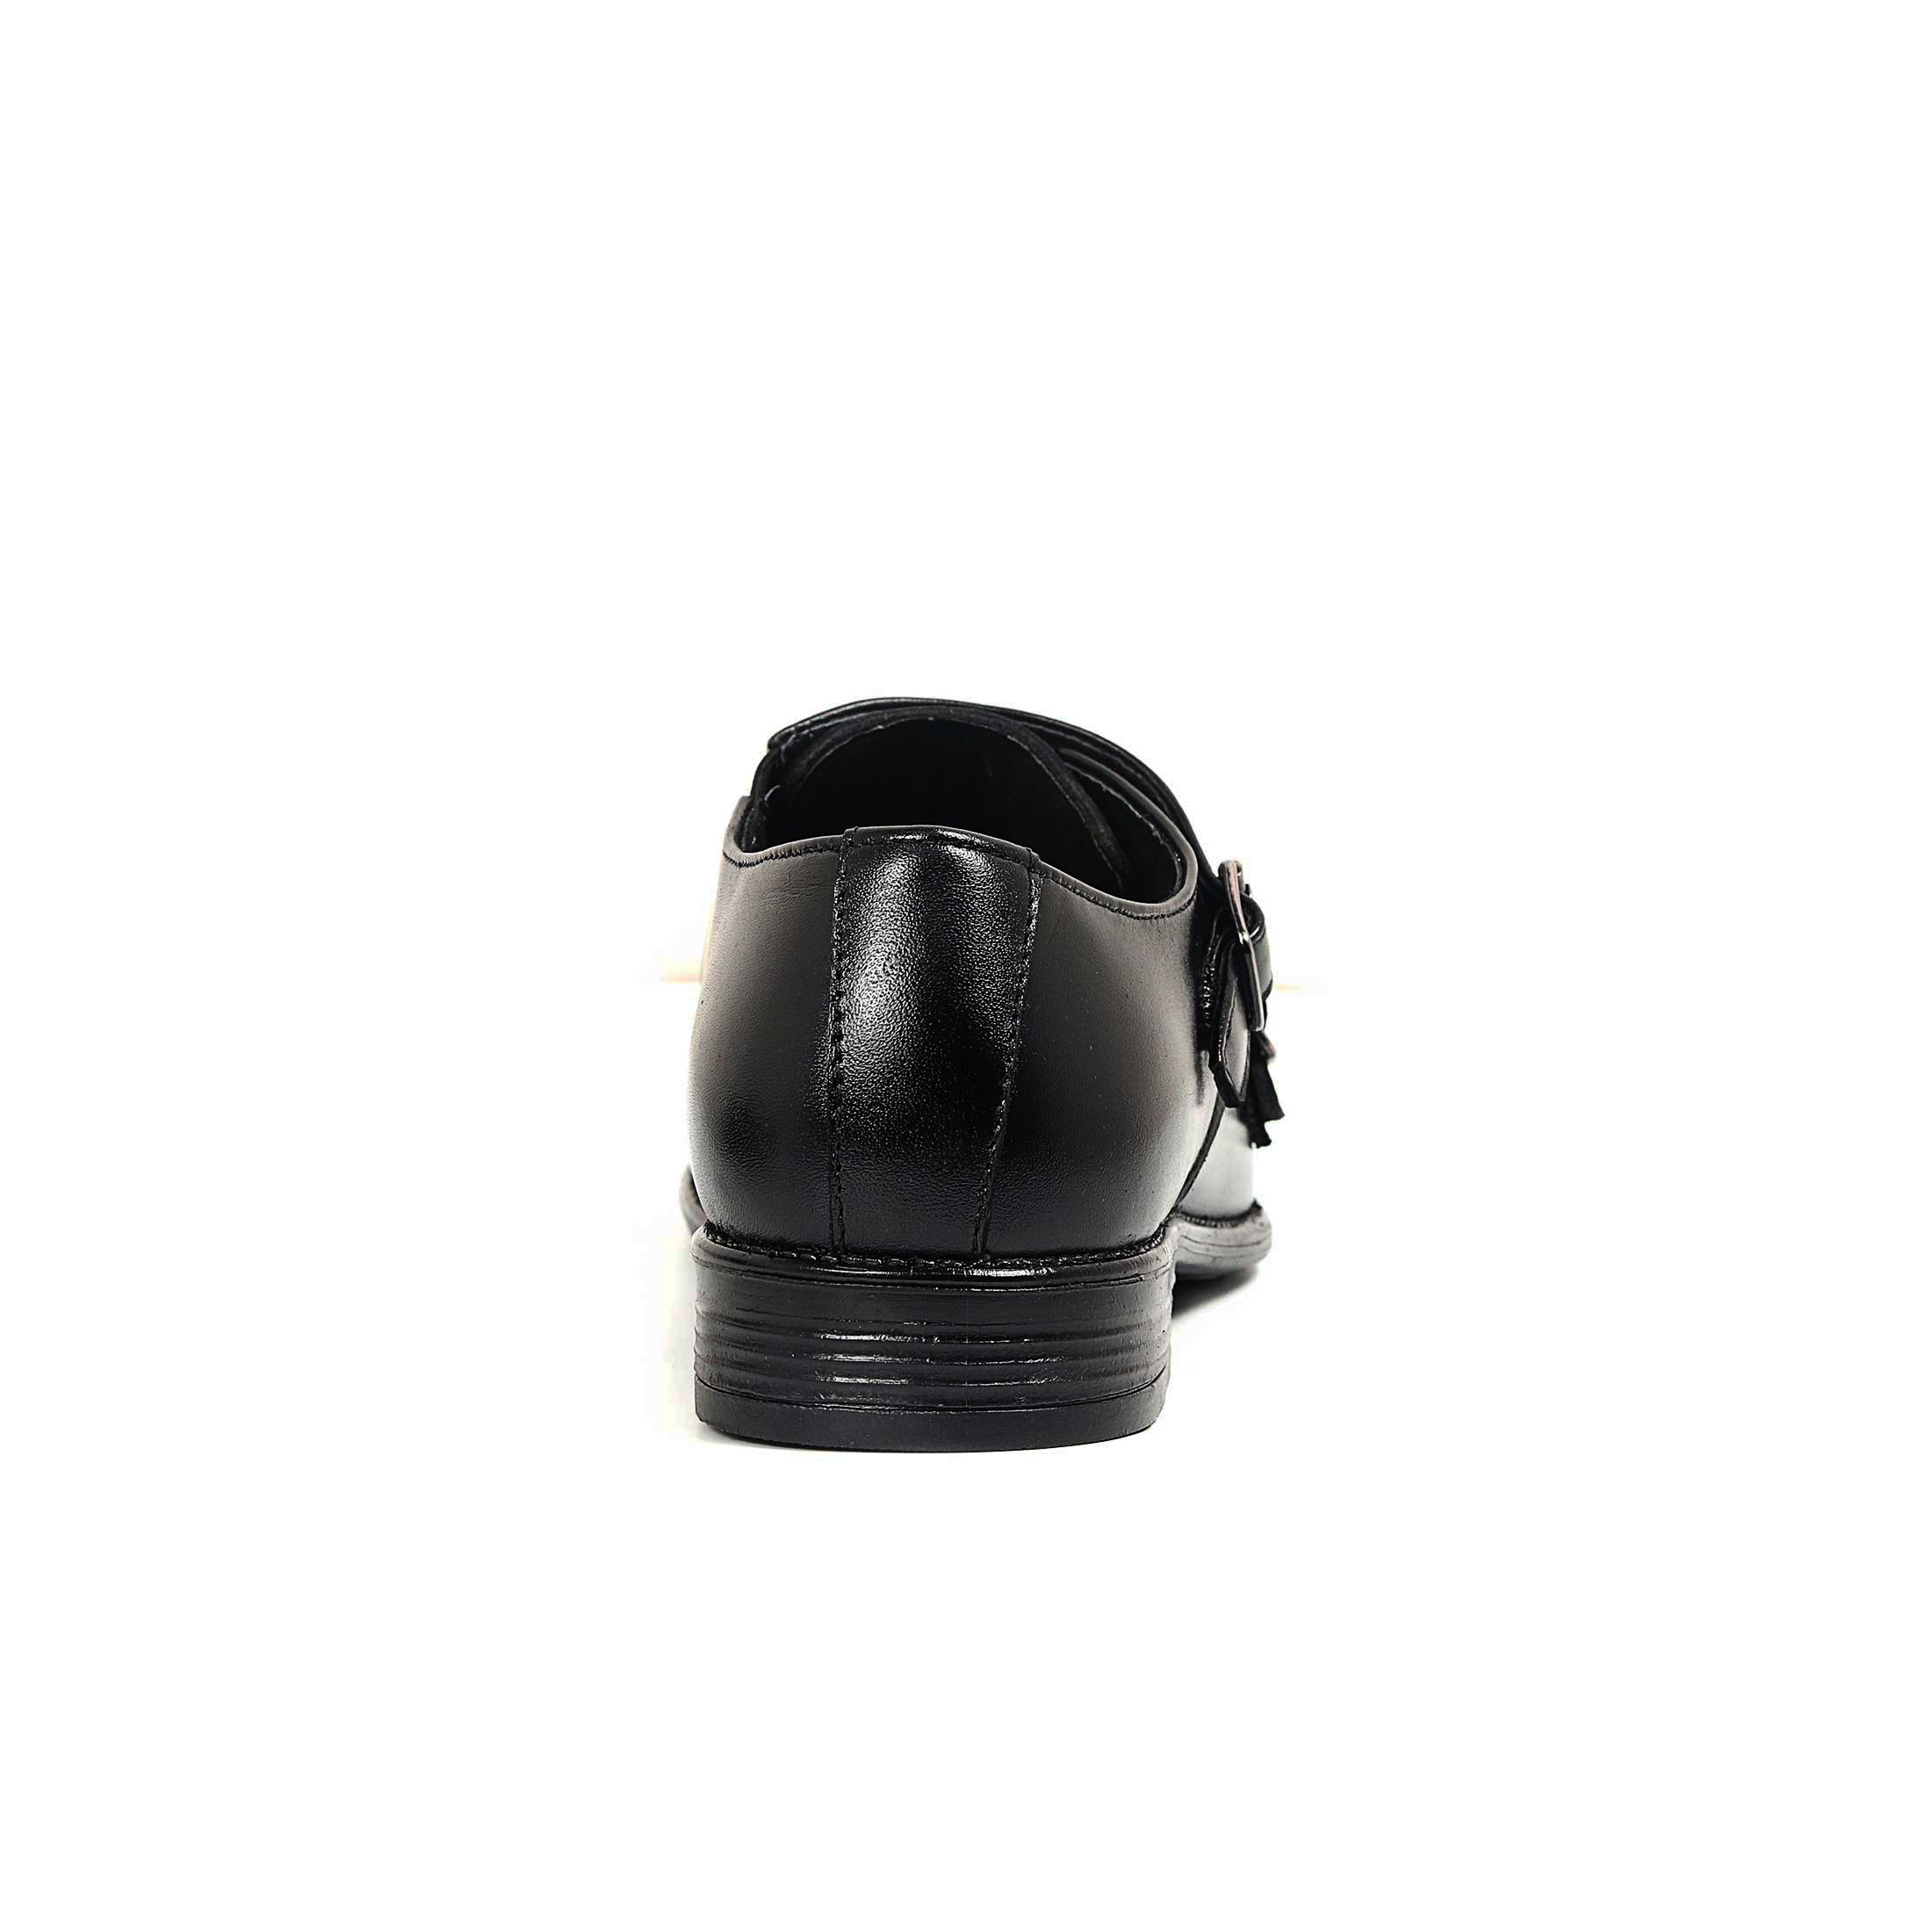 Zays Premium Leather Double Monk Strap Formal Shoe For Men (Black) - ZAYSSF39